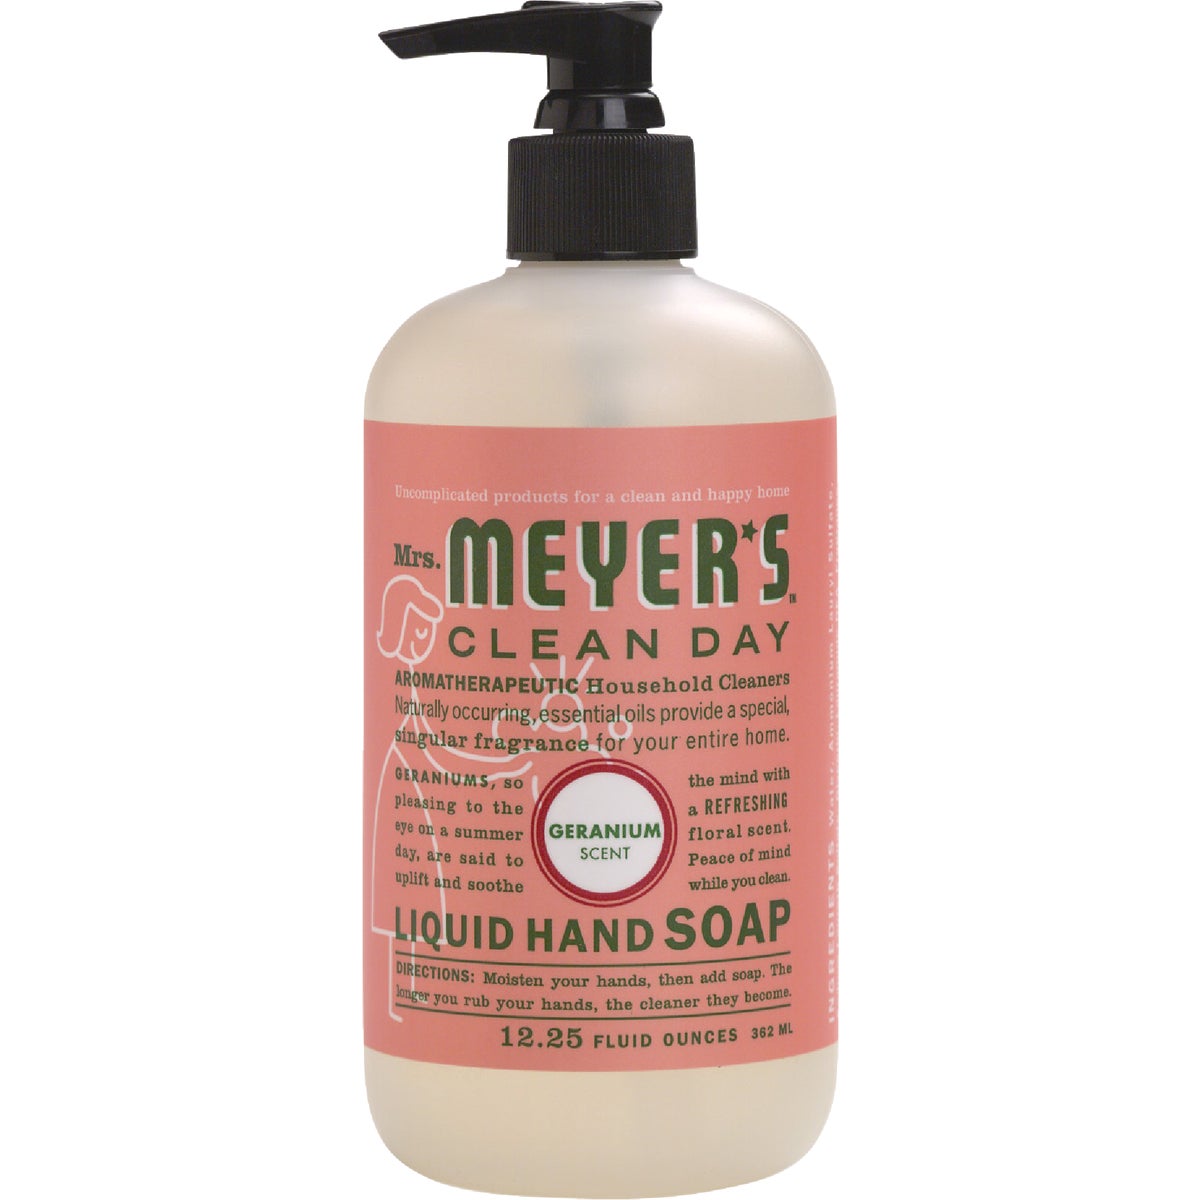 Mrs. Meyer's Clean Day 12.5 Oz. Geranium Liquid Hand Soap